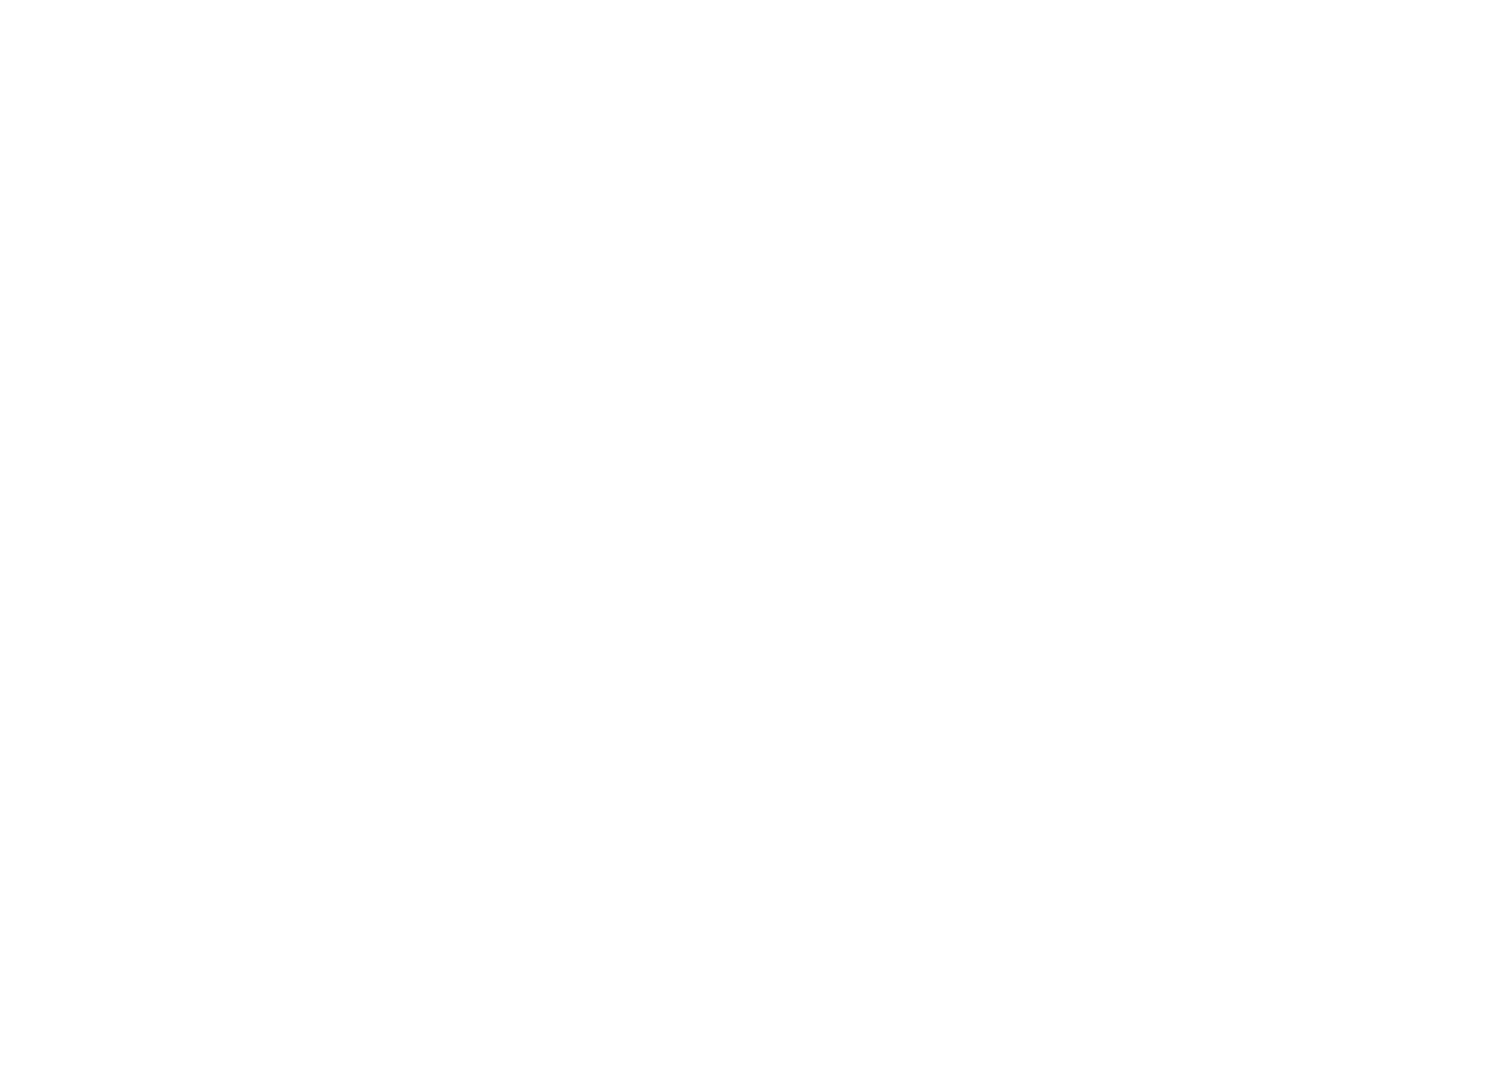 Cameron Jeffcoat Photography 